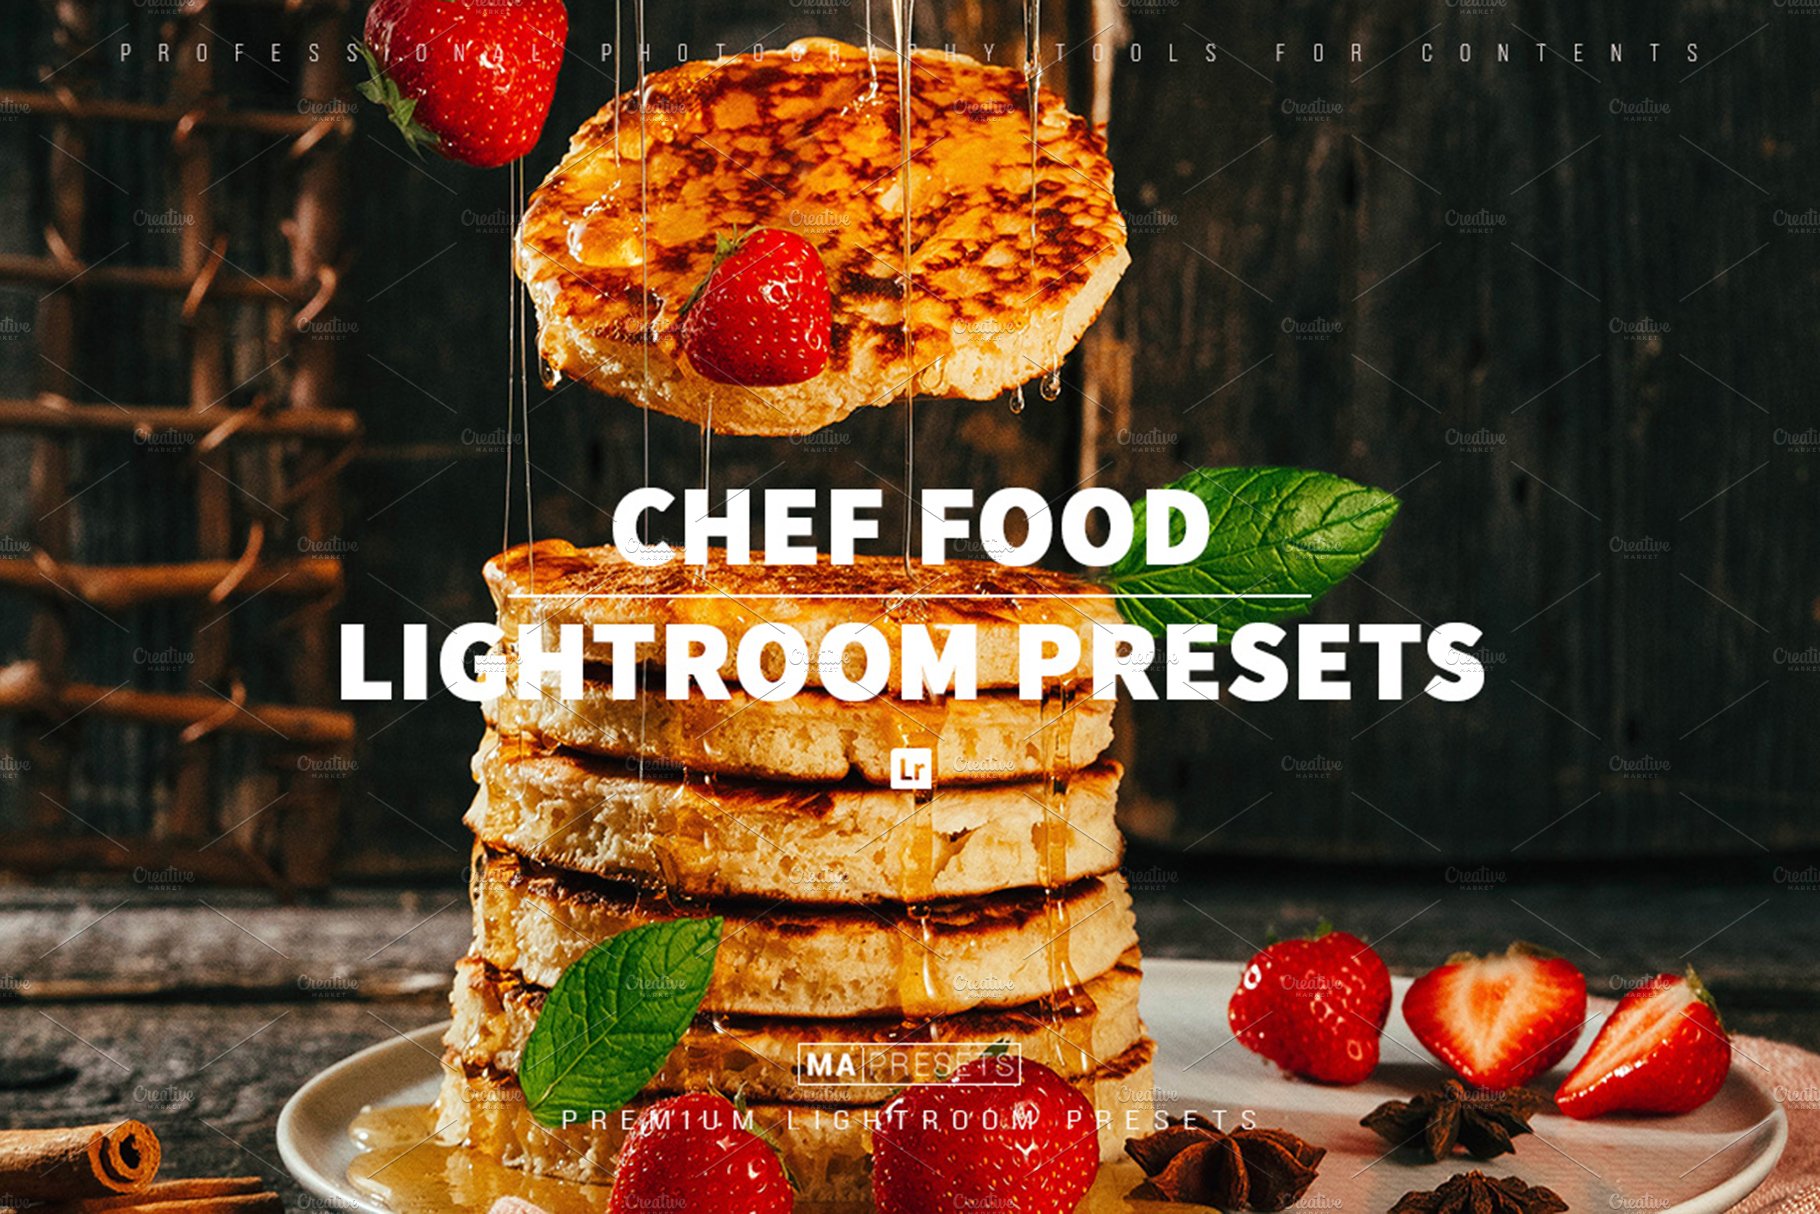 10 CHEF FOOD Lightroom Presetscover image.